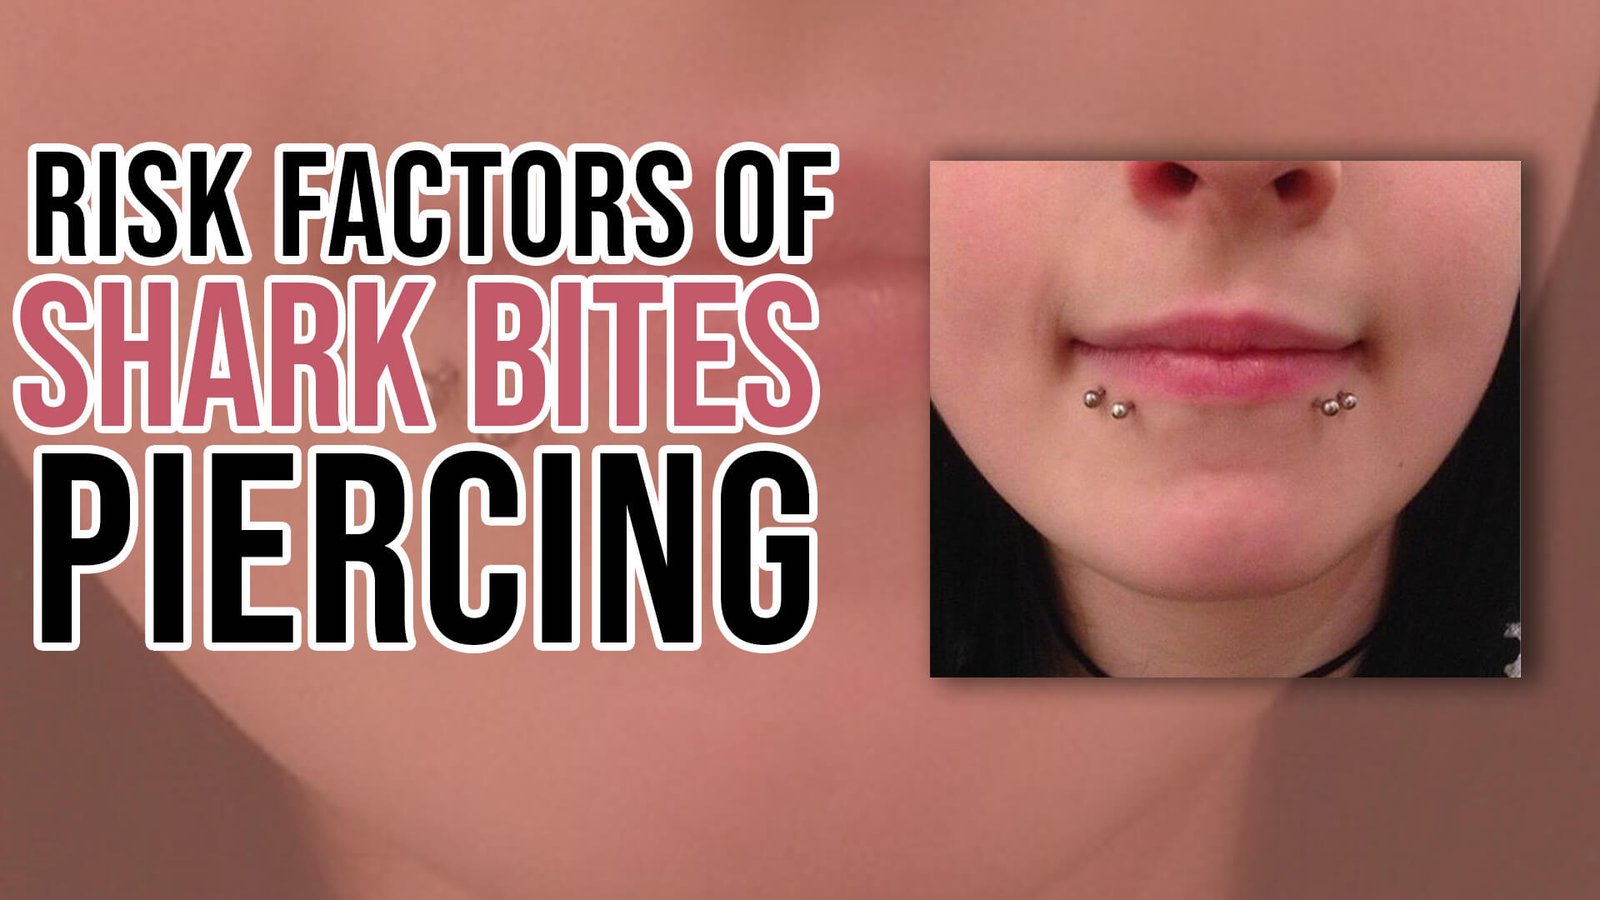 risk factors of shark bites piercing